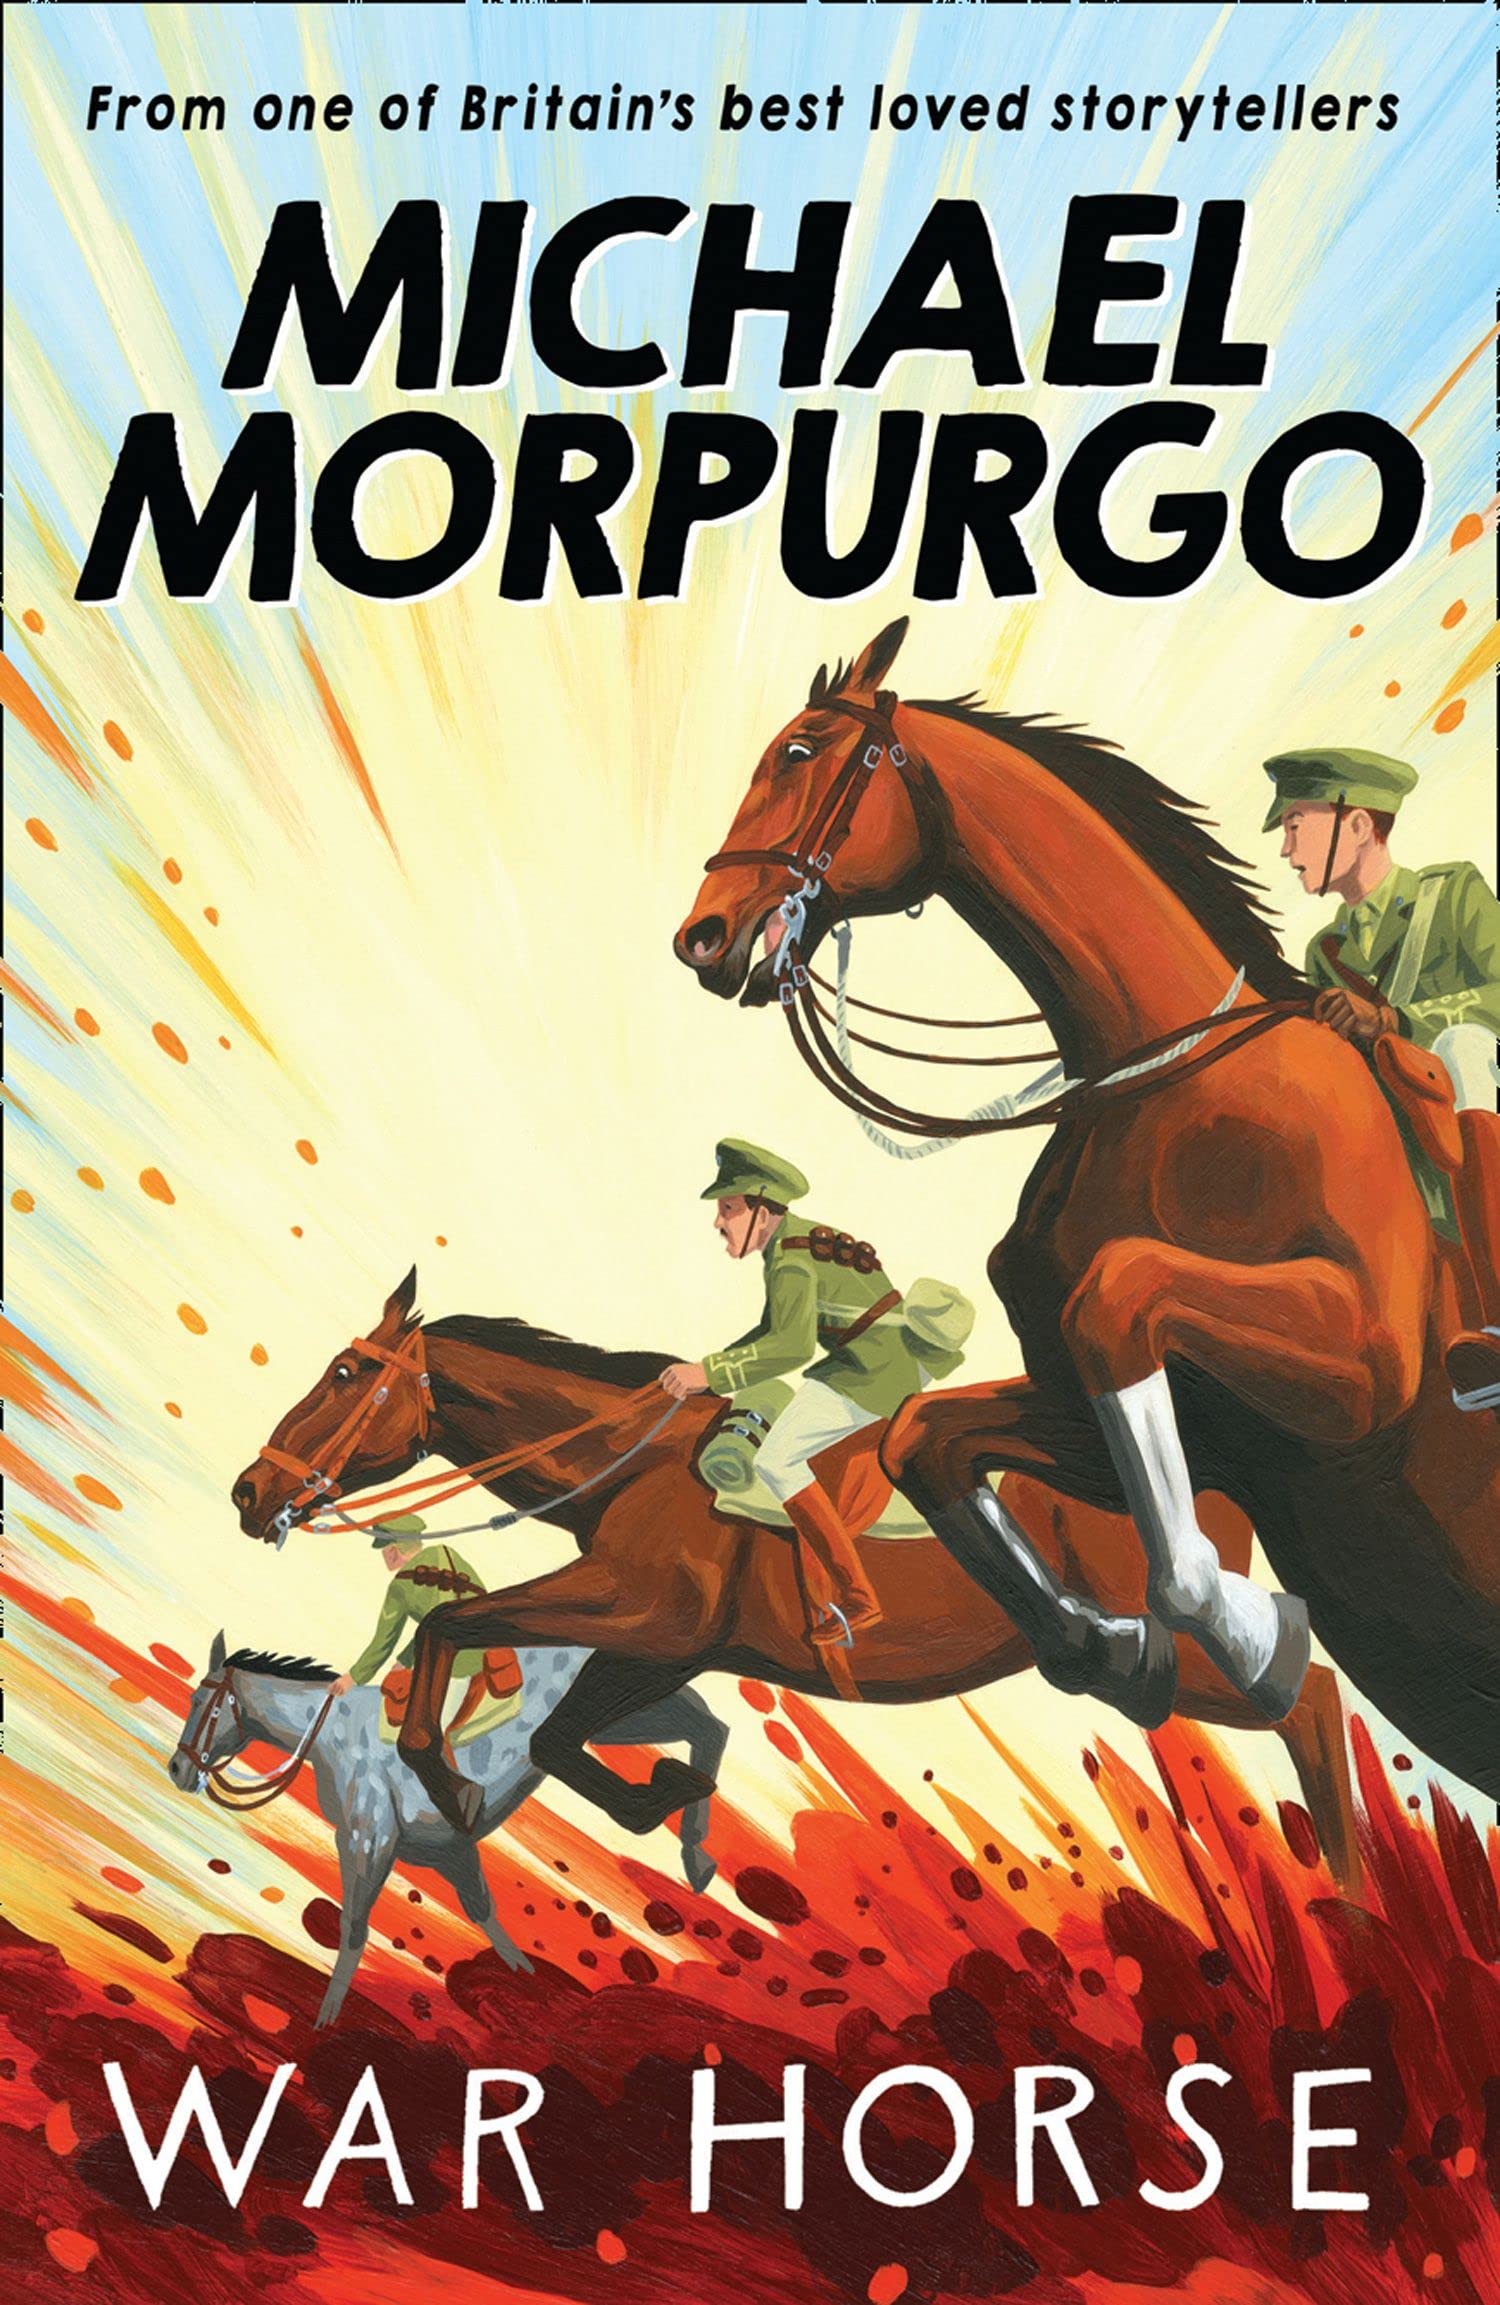 War horse by Michael Morpurgo - Vocabulary